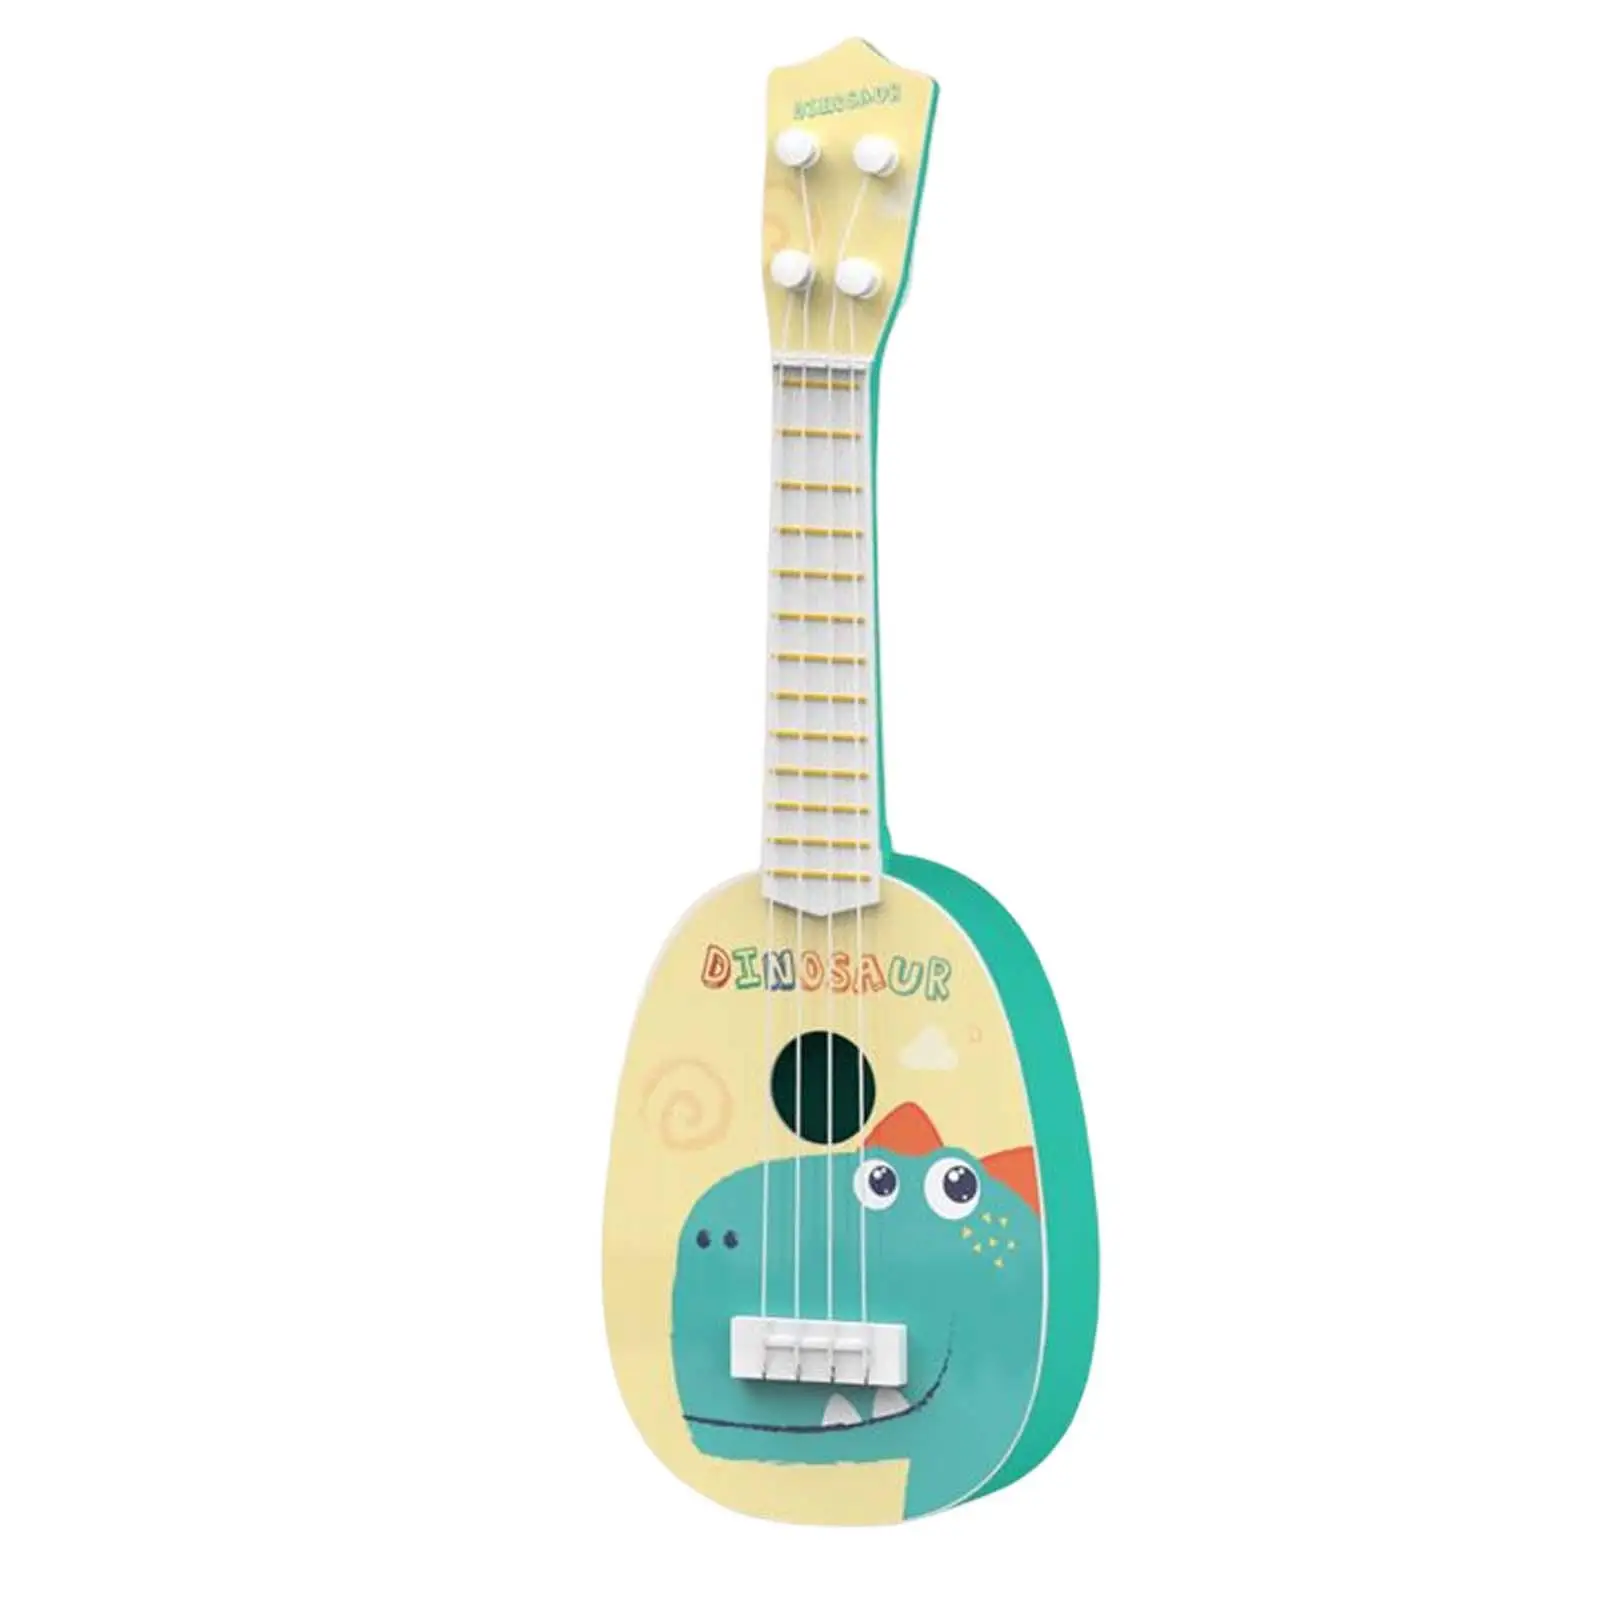 Small Ukulele Toys Mini Ukulele Early Learning Education Toy Musical Instrument for Boy Children Girls Beginner Gifts